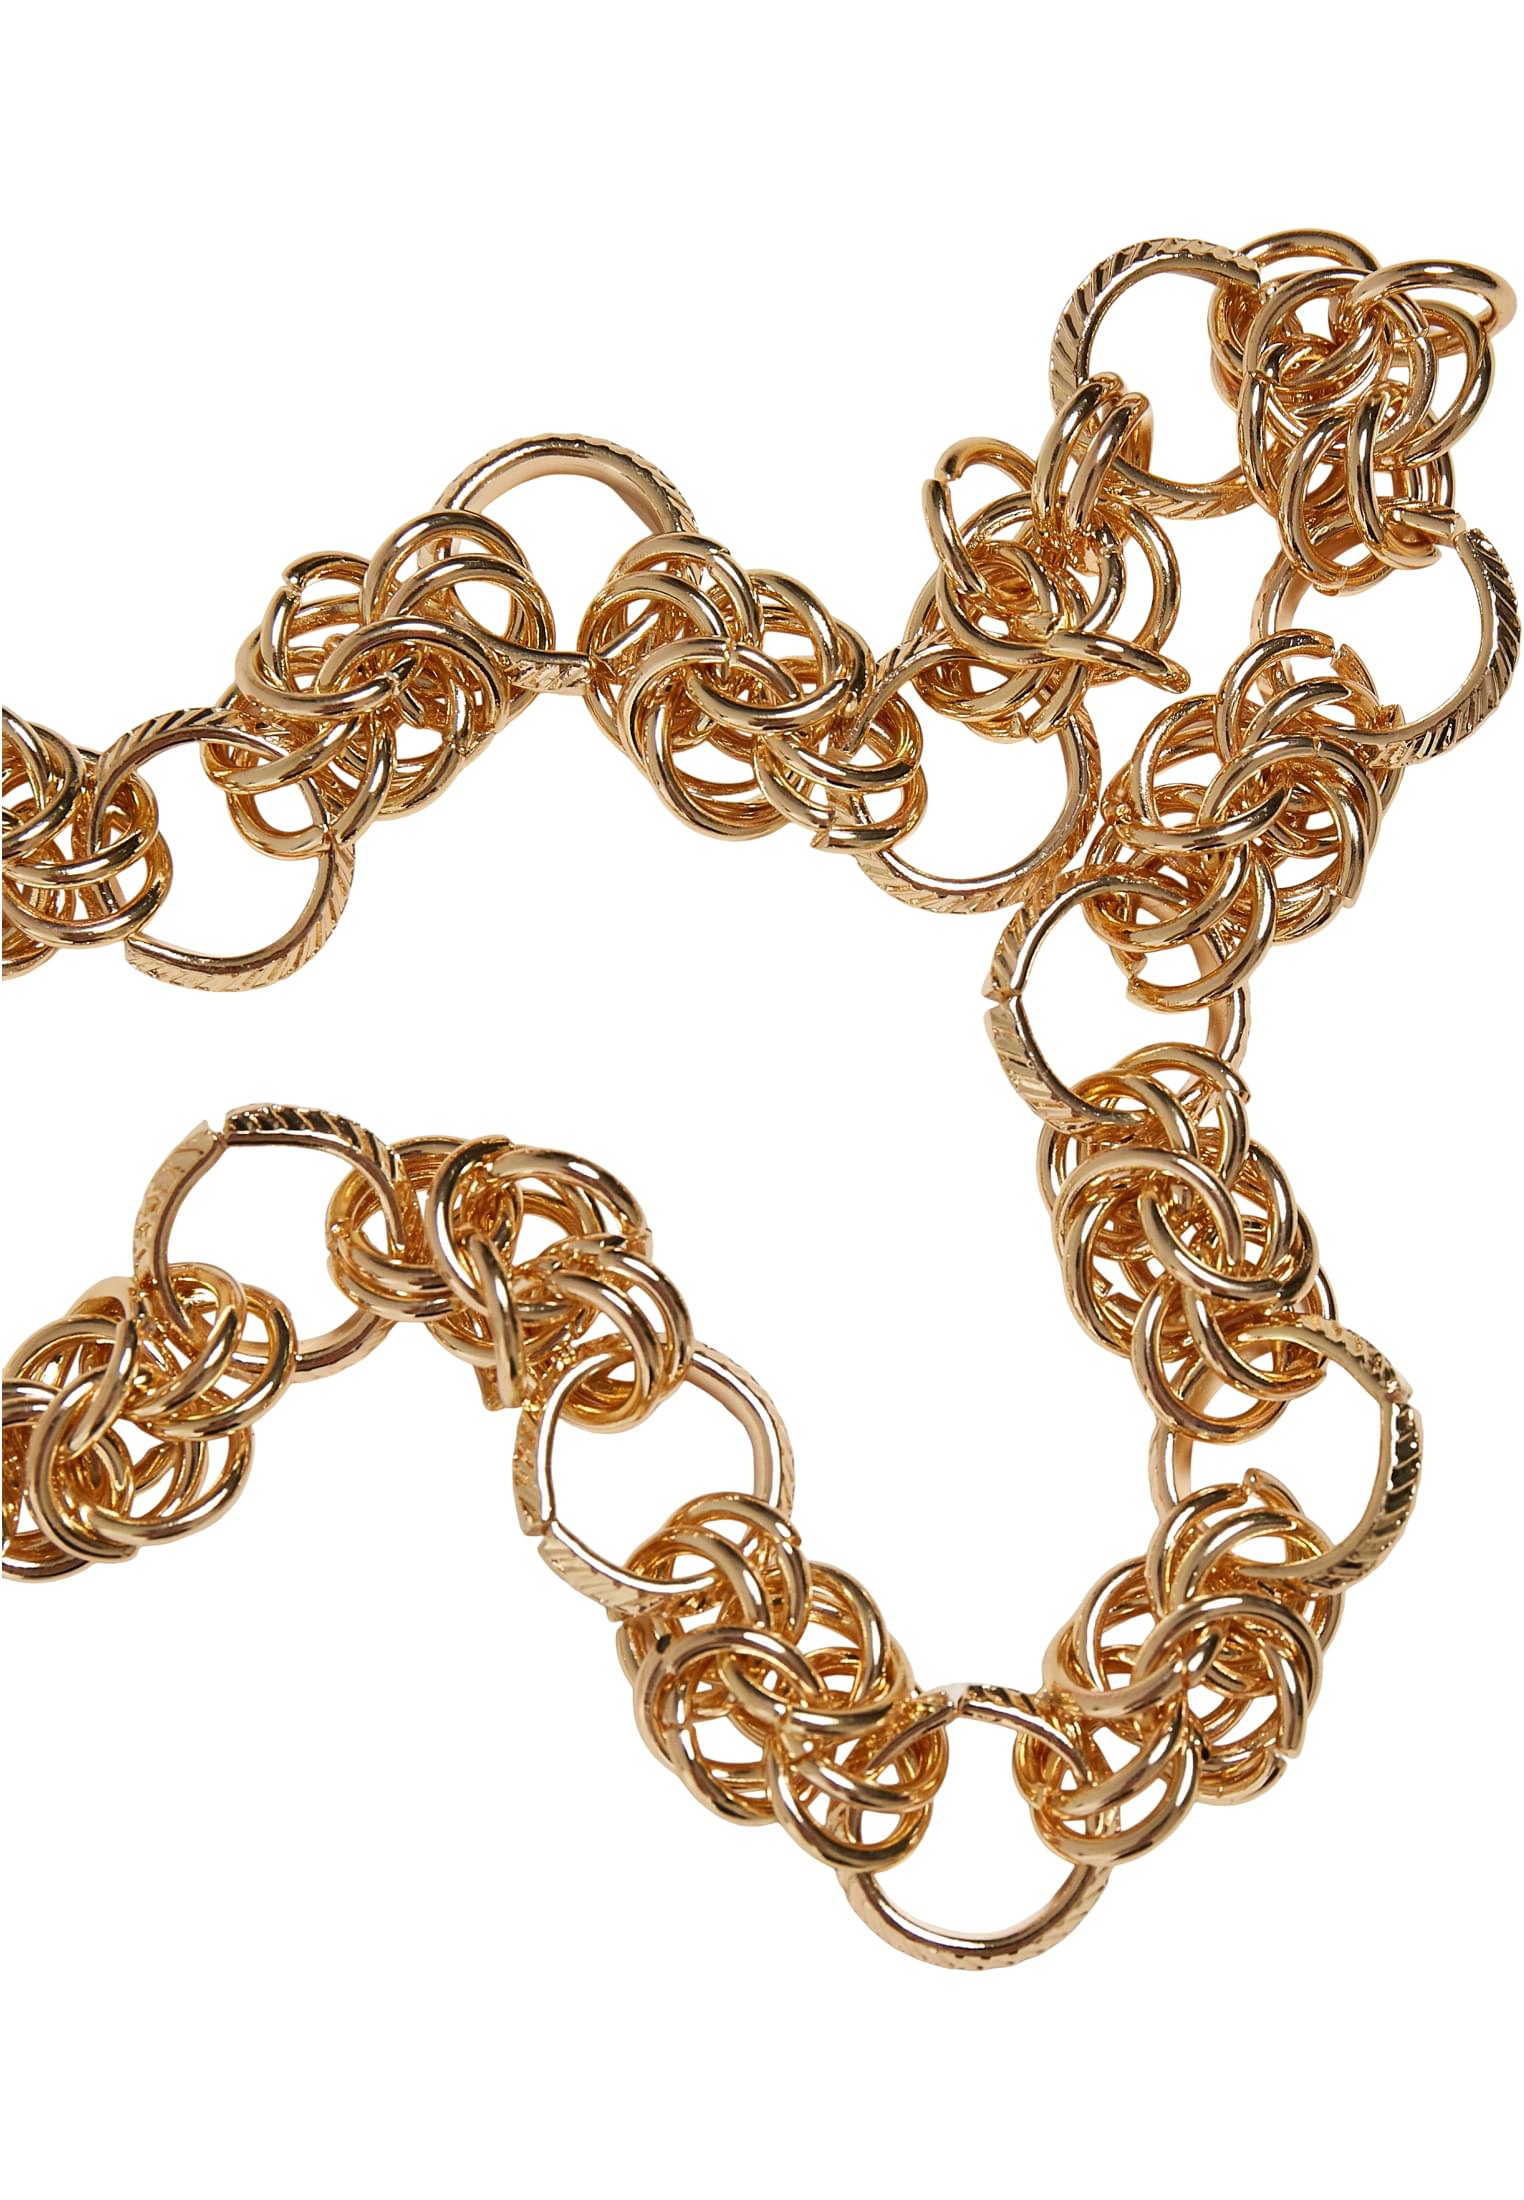 Schmuck Multiring Necklace in Farbe gold